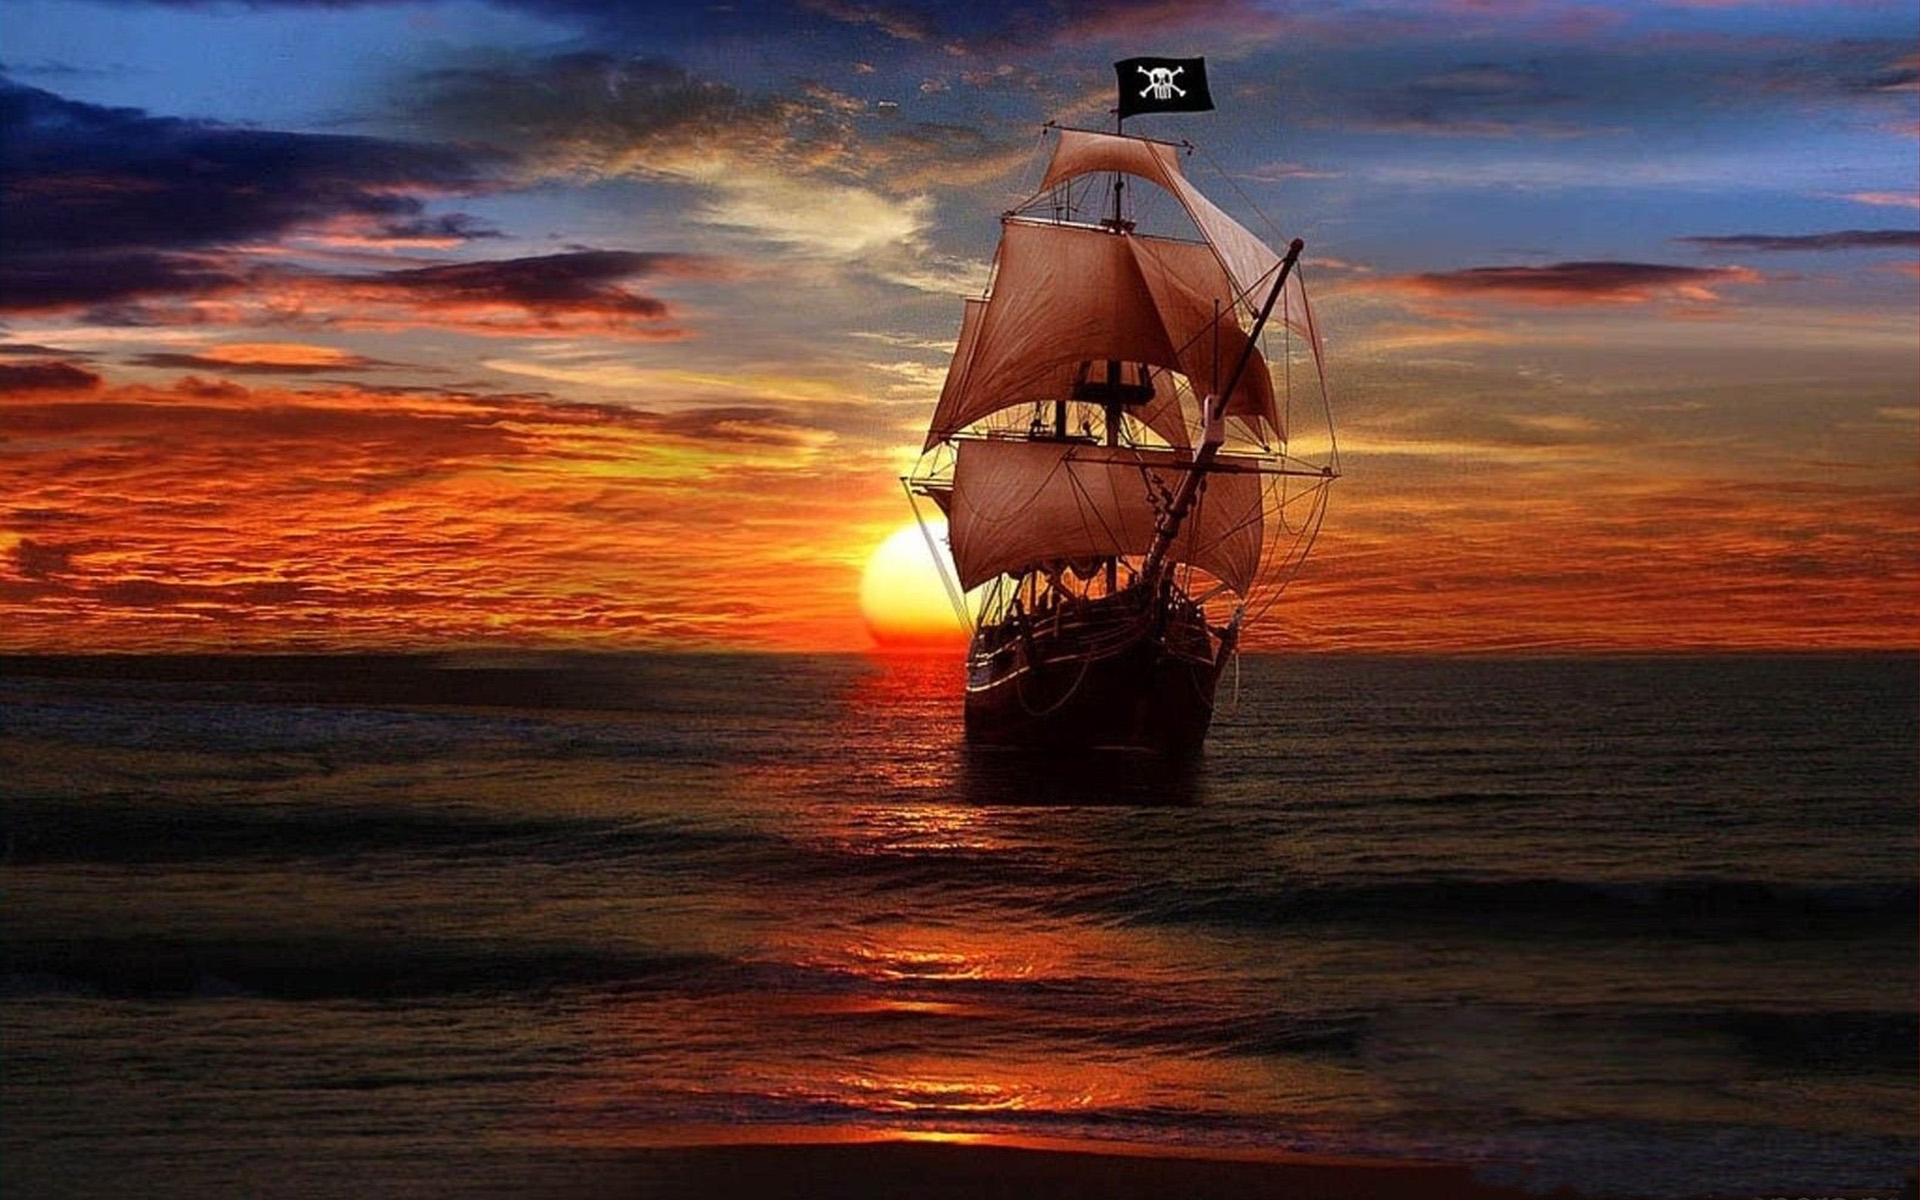 Sunset and Pirate Ship Fantasy art Desktop Wallpaper HD 1920x1200 :  